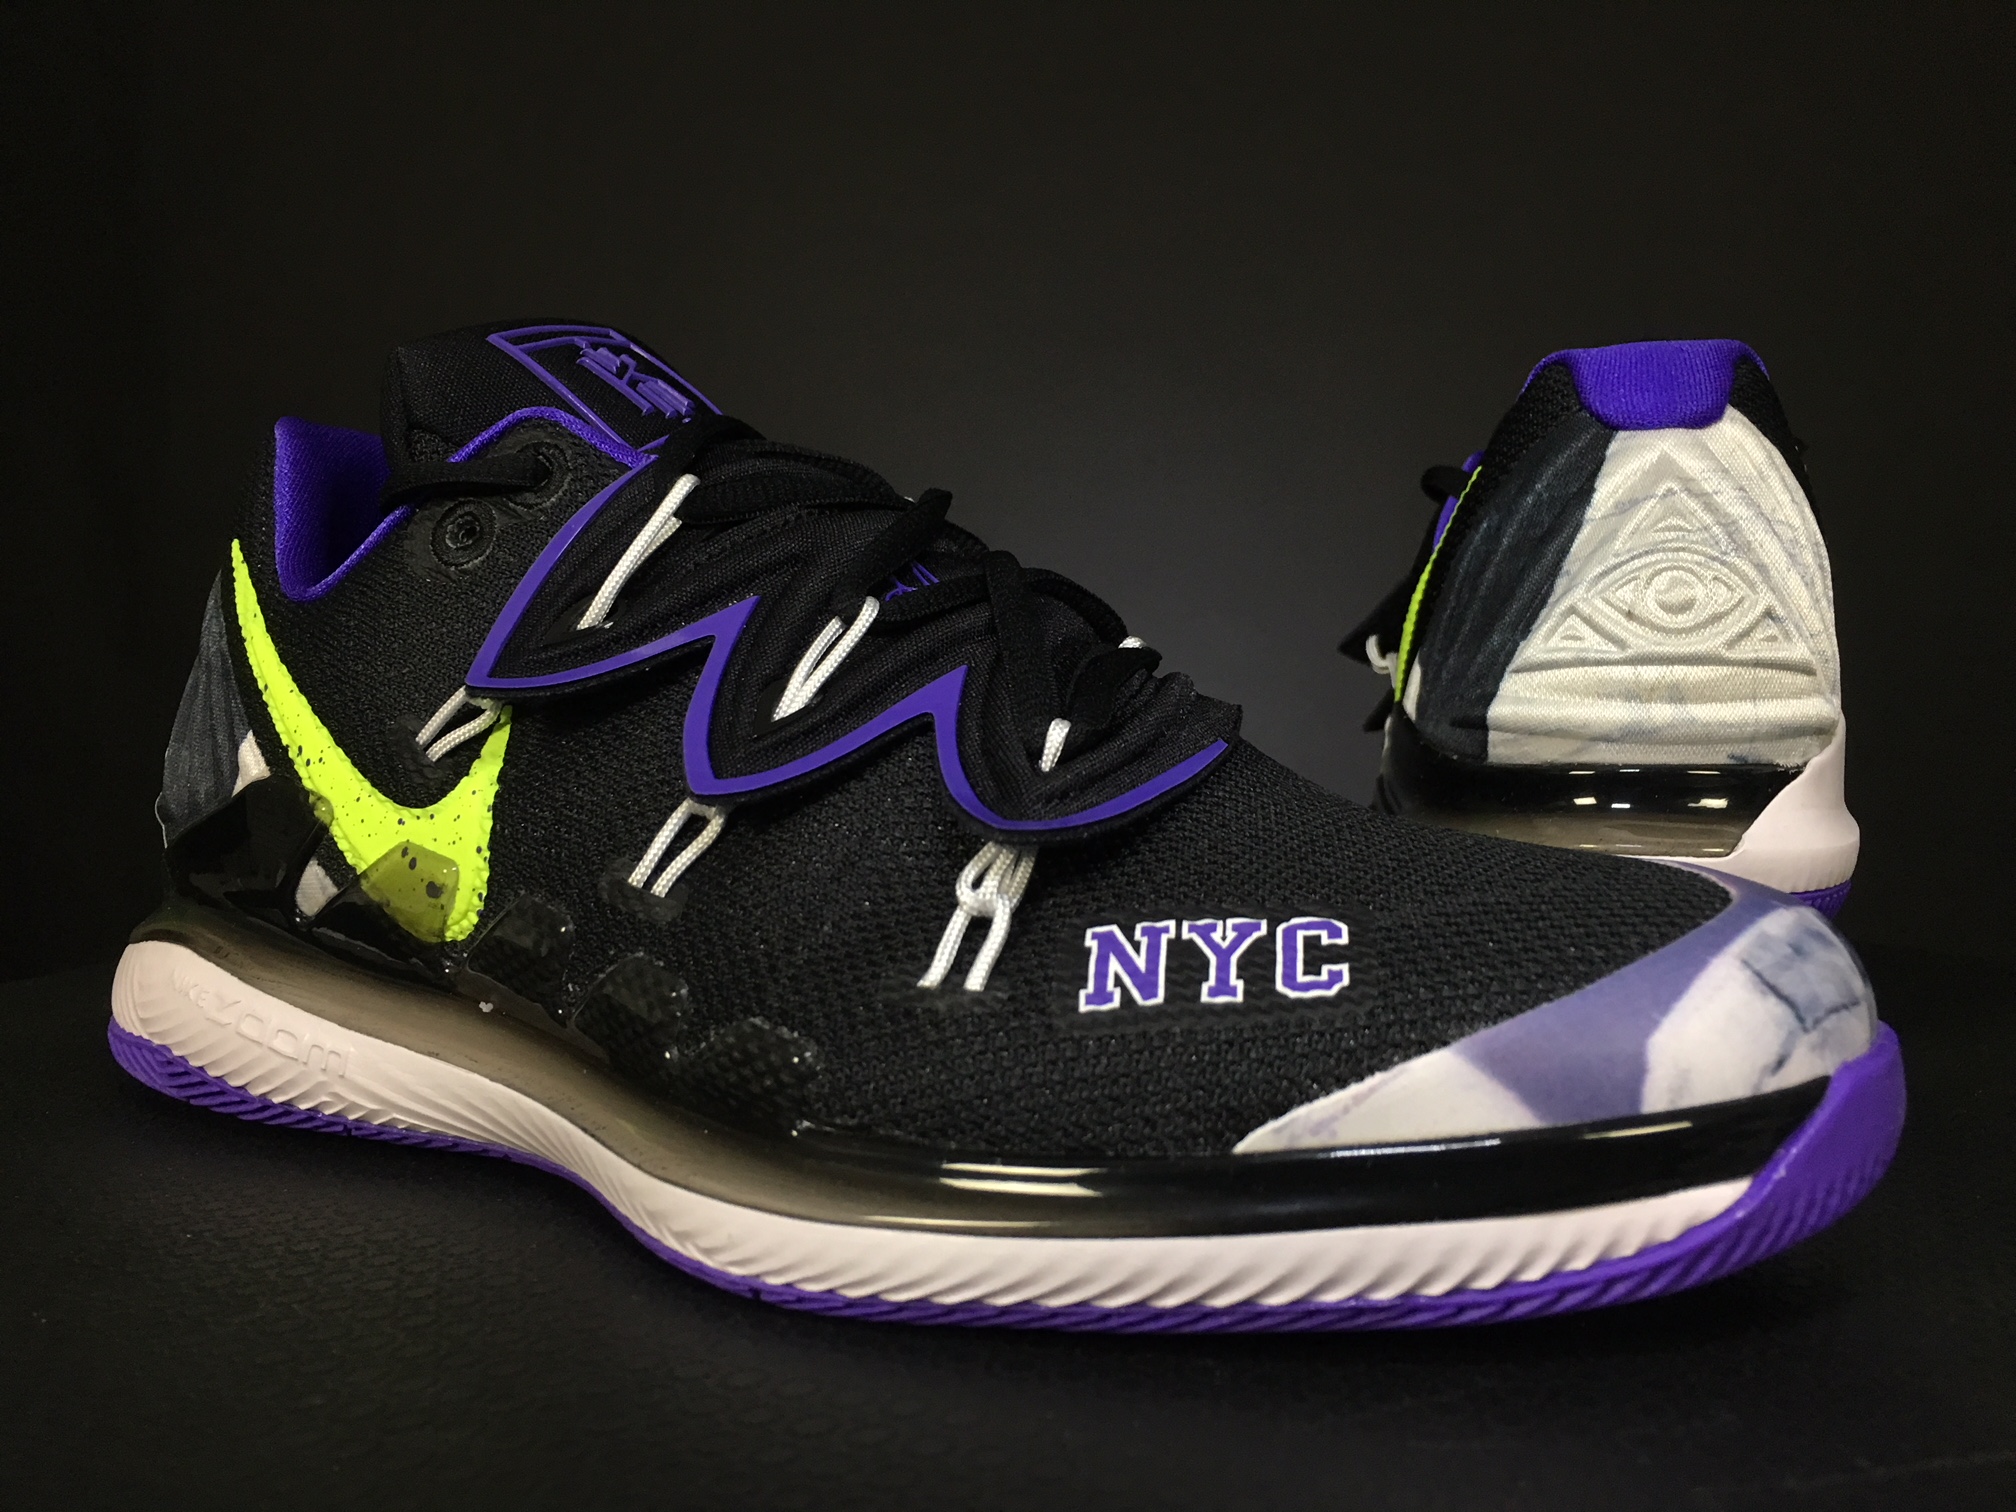 Nick Kyrgios’ Vapor X Kyrie V NYC Tennis Shoes